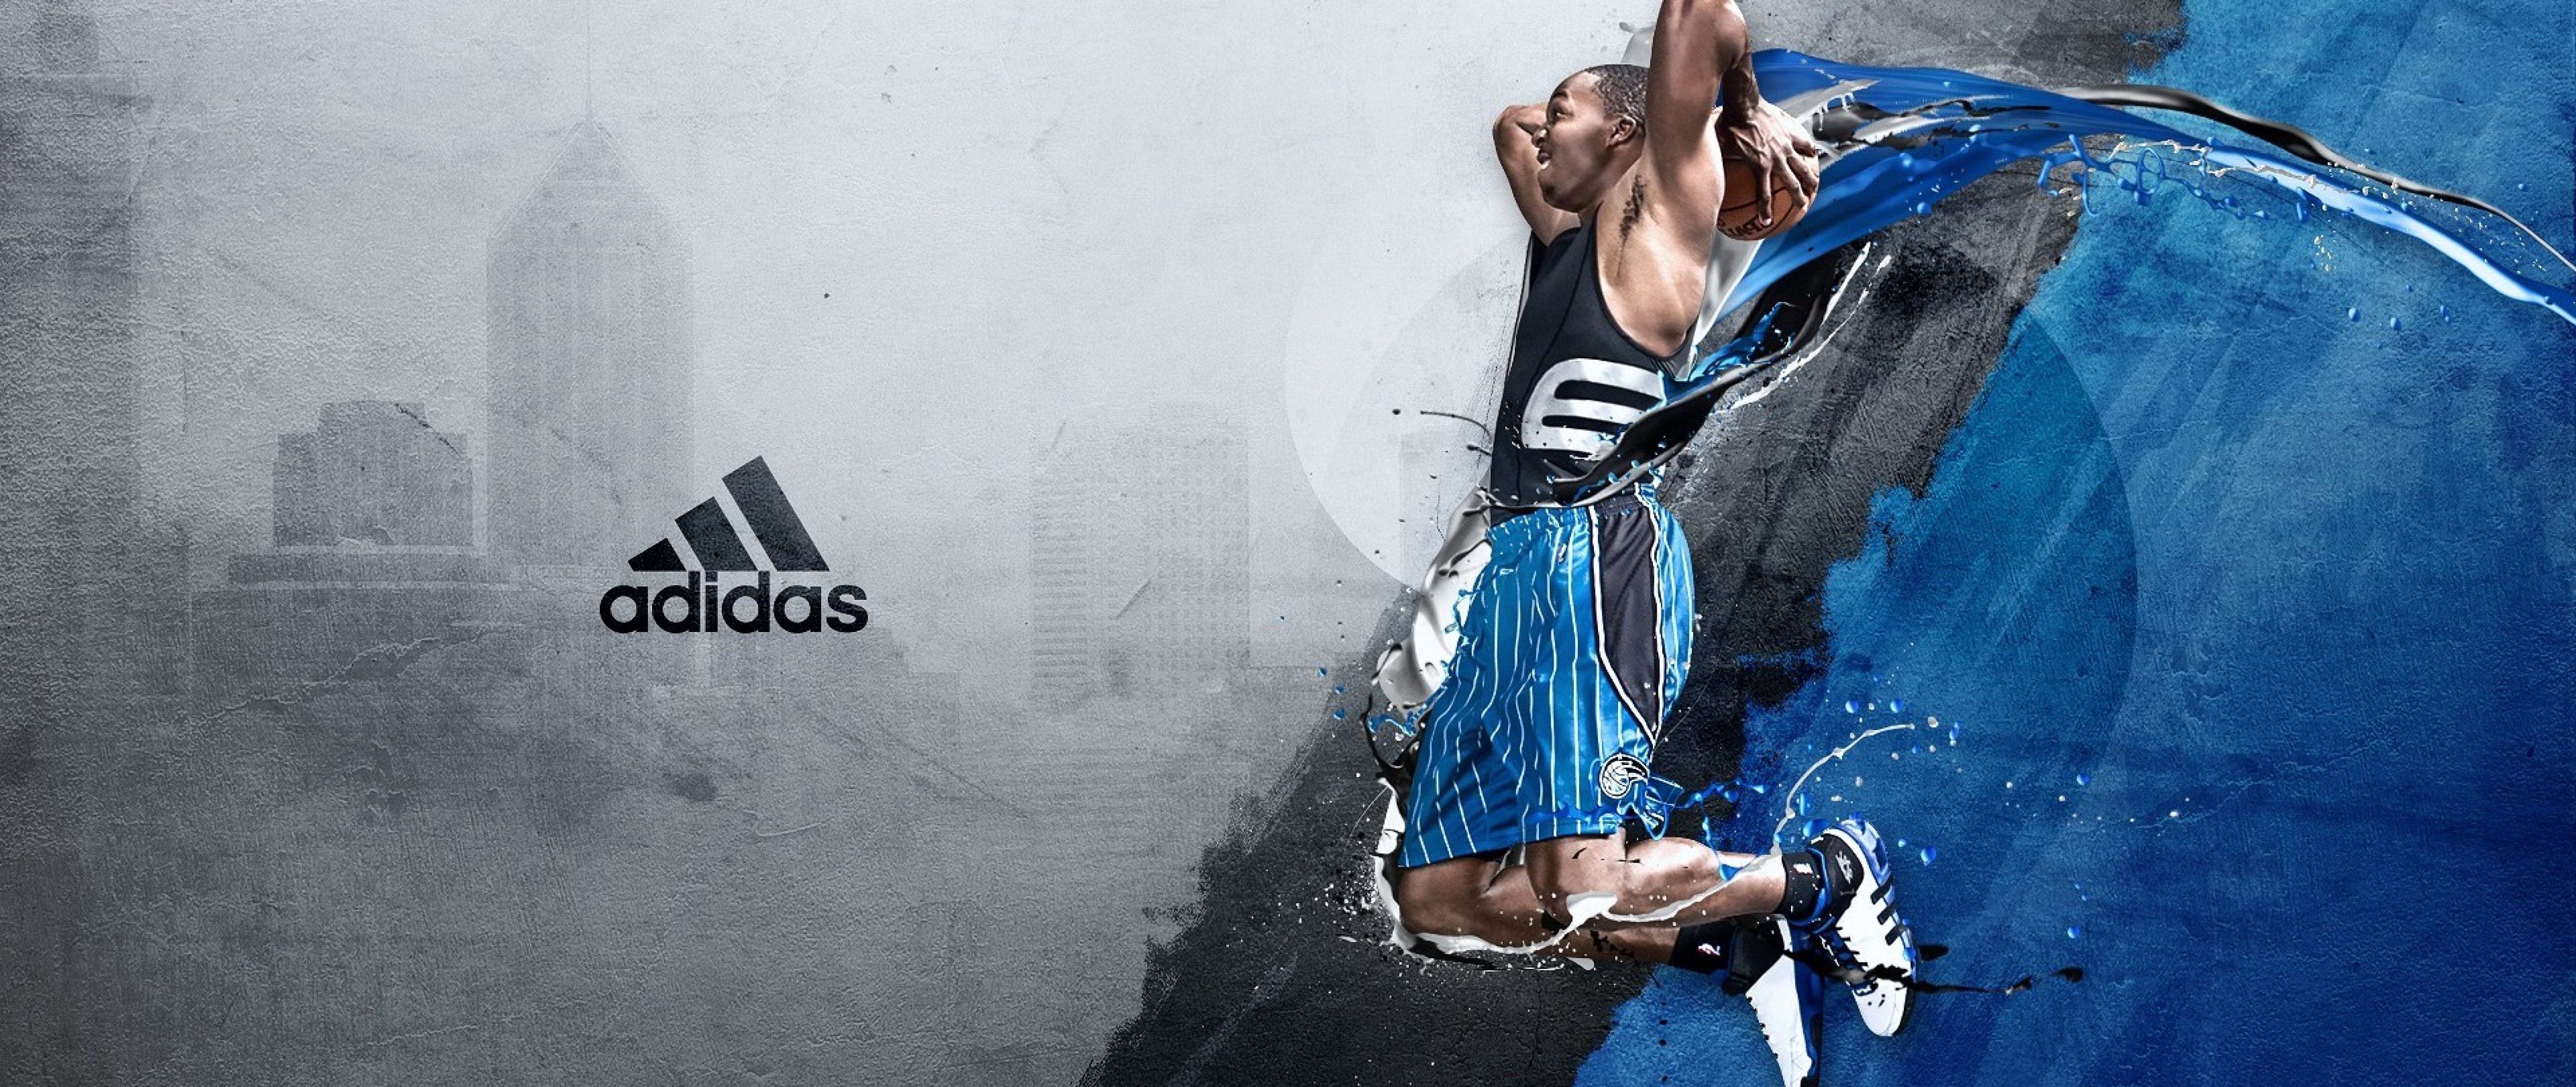 Adidas Brand - HD Wallpaper 